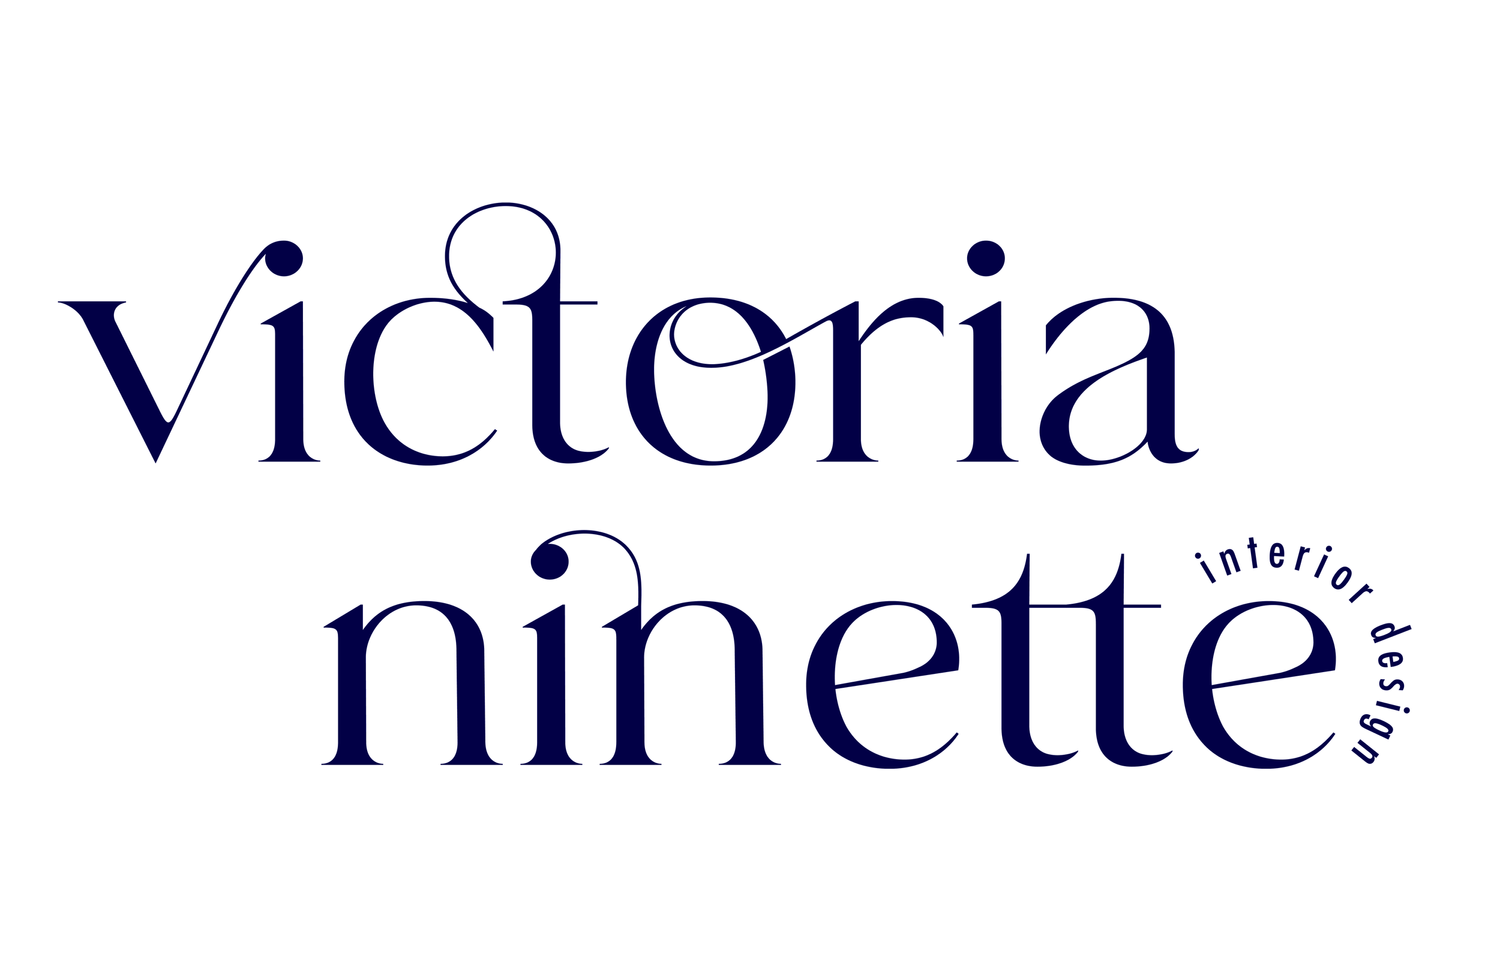 Victoria Ninette